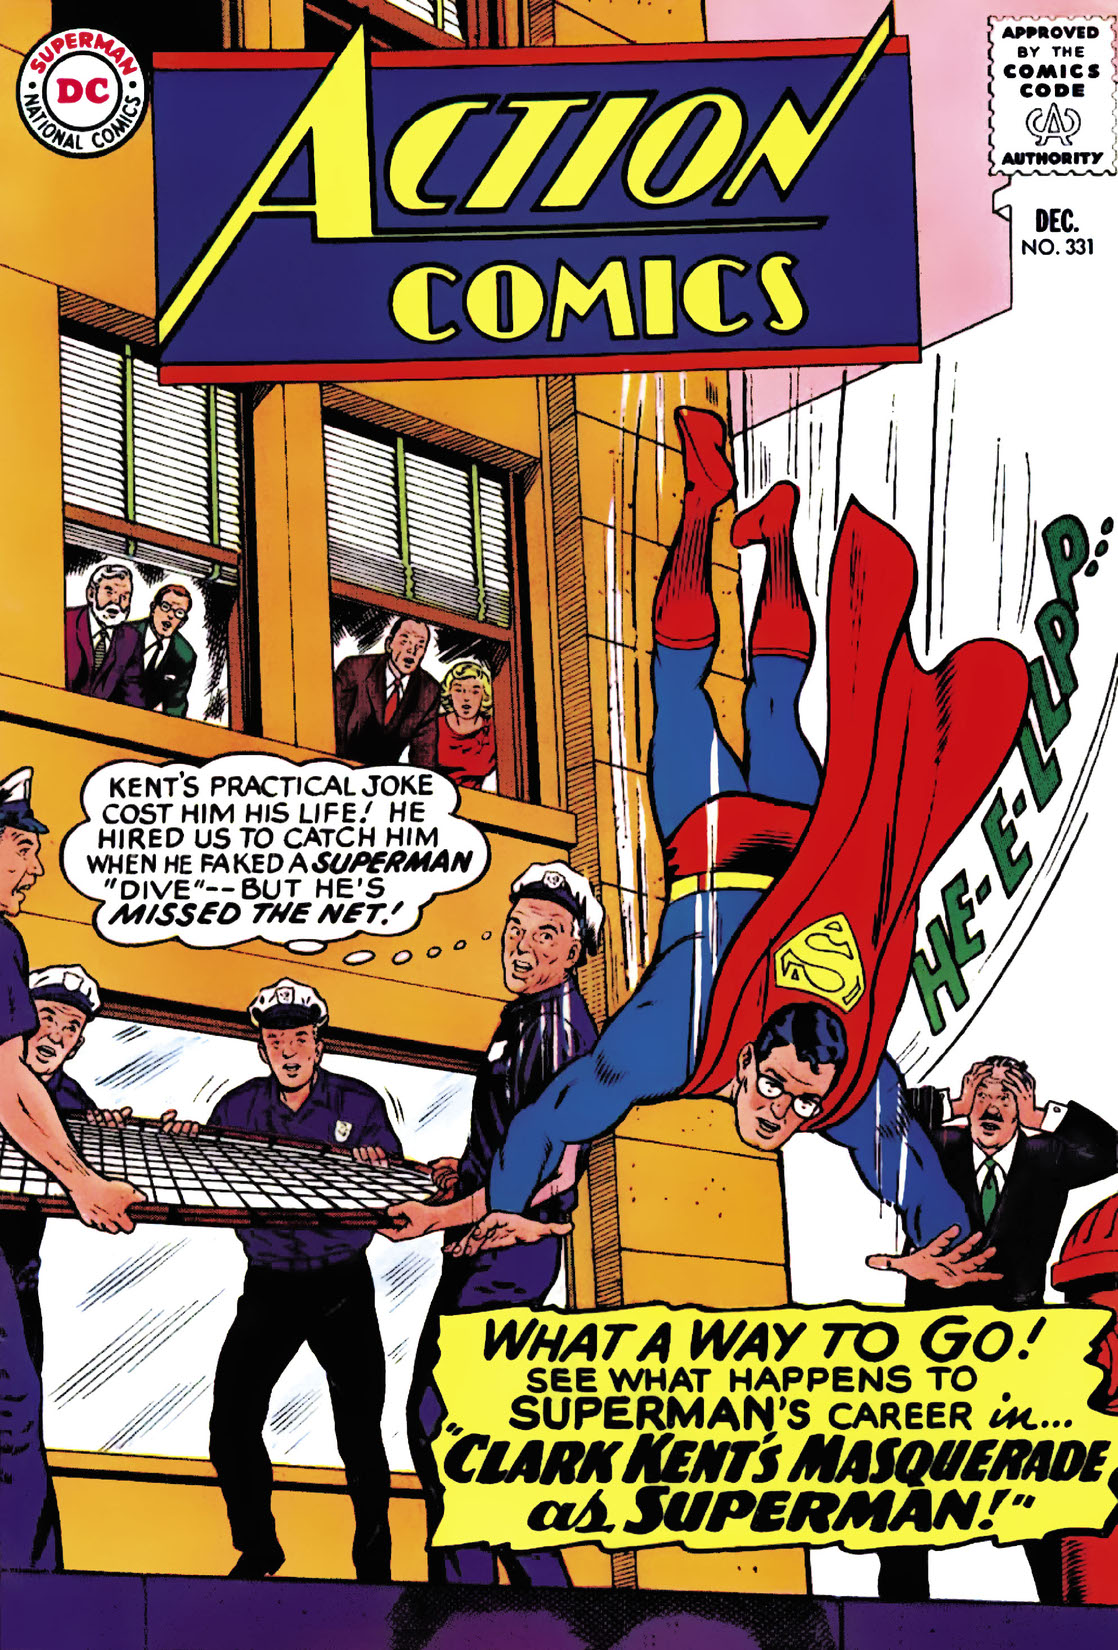 Action Comics (1938-) #331 preview images